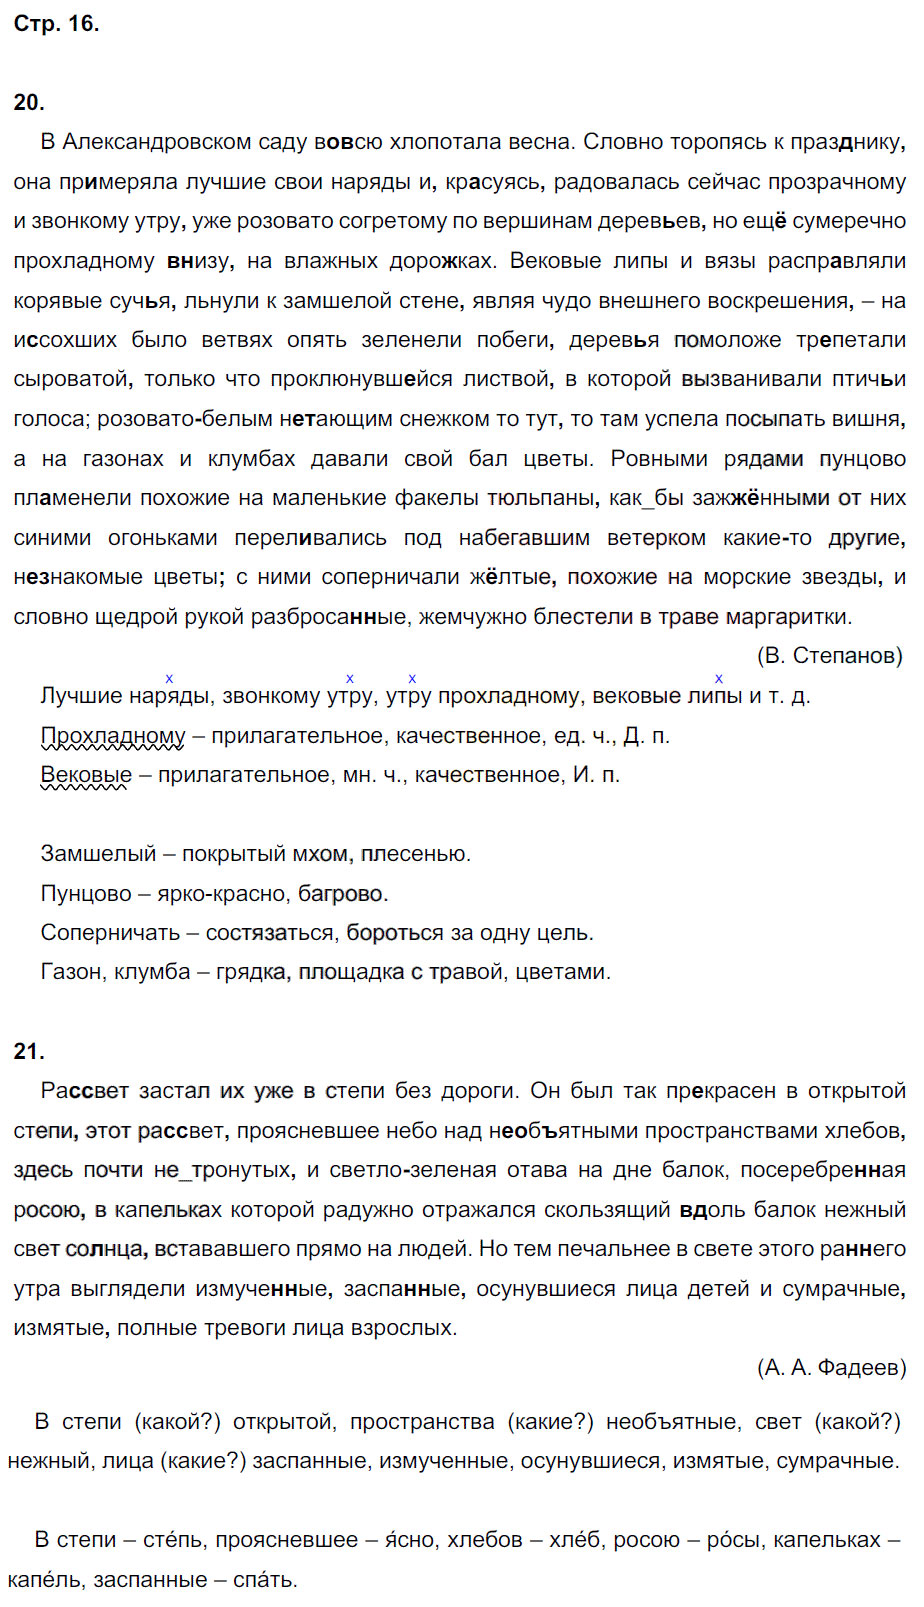 гдз 8 класс рабочая тетрадь страница 16 русский язык Кулаева